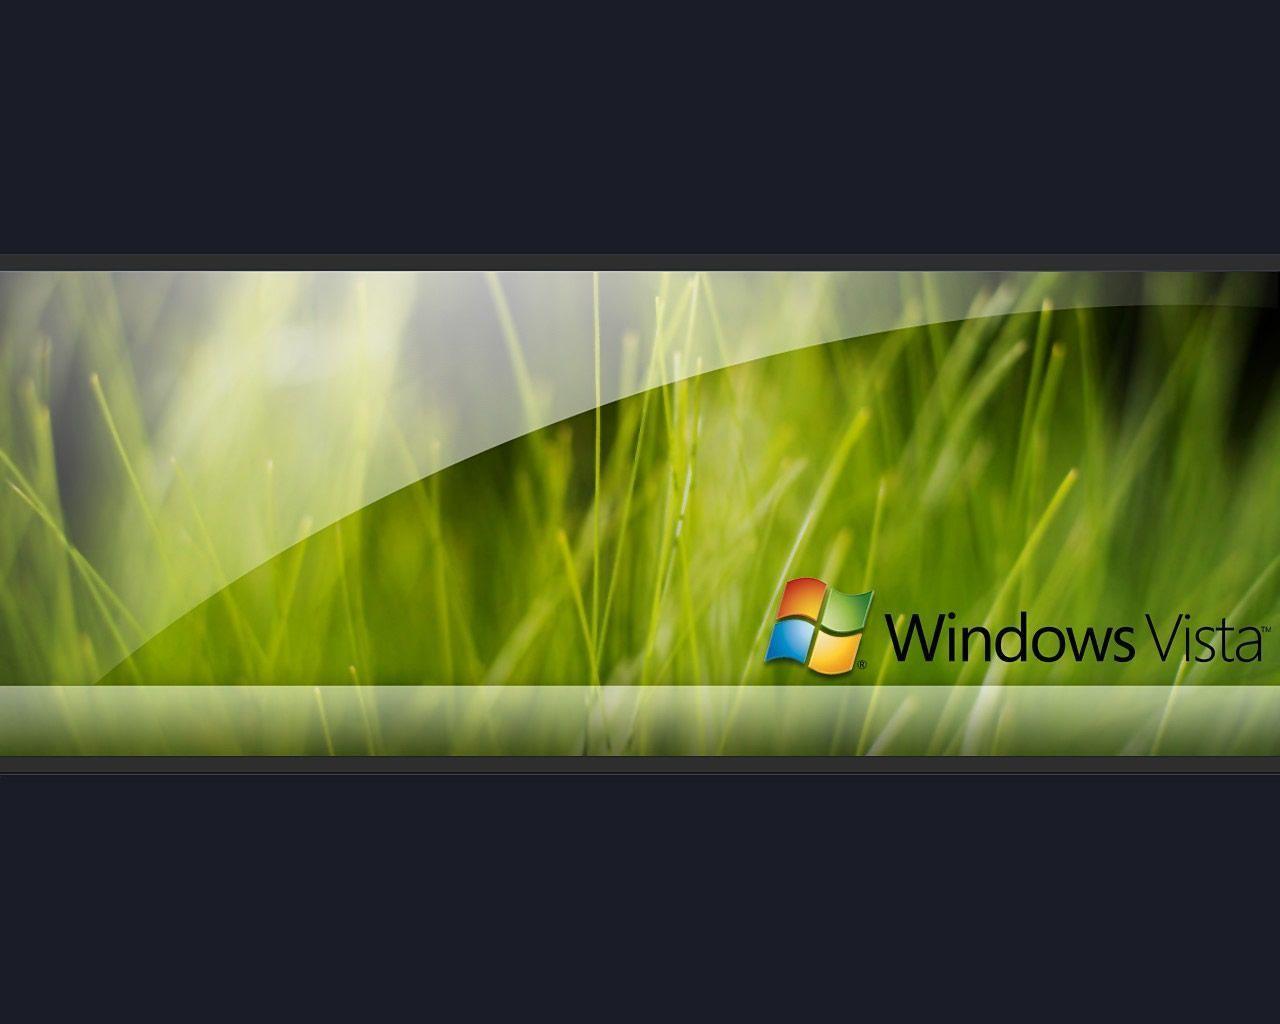 Windows Vista Wallpaper. Free Download Cracked Software